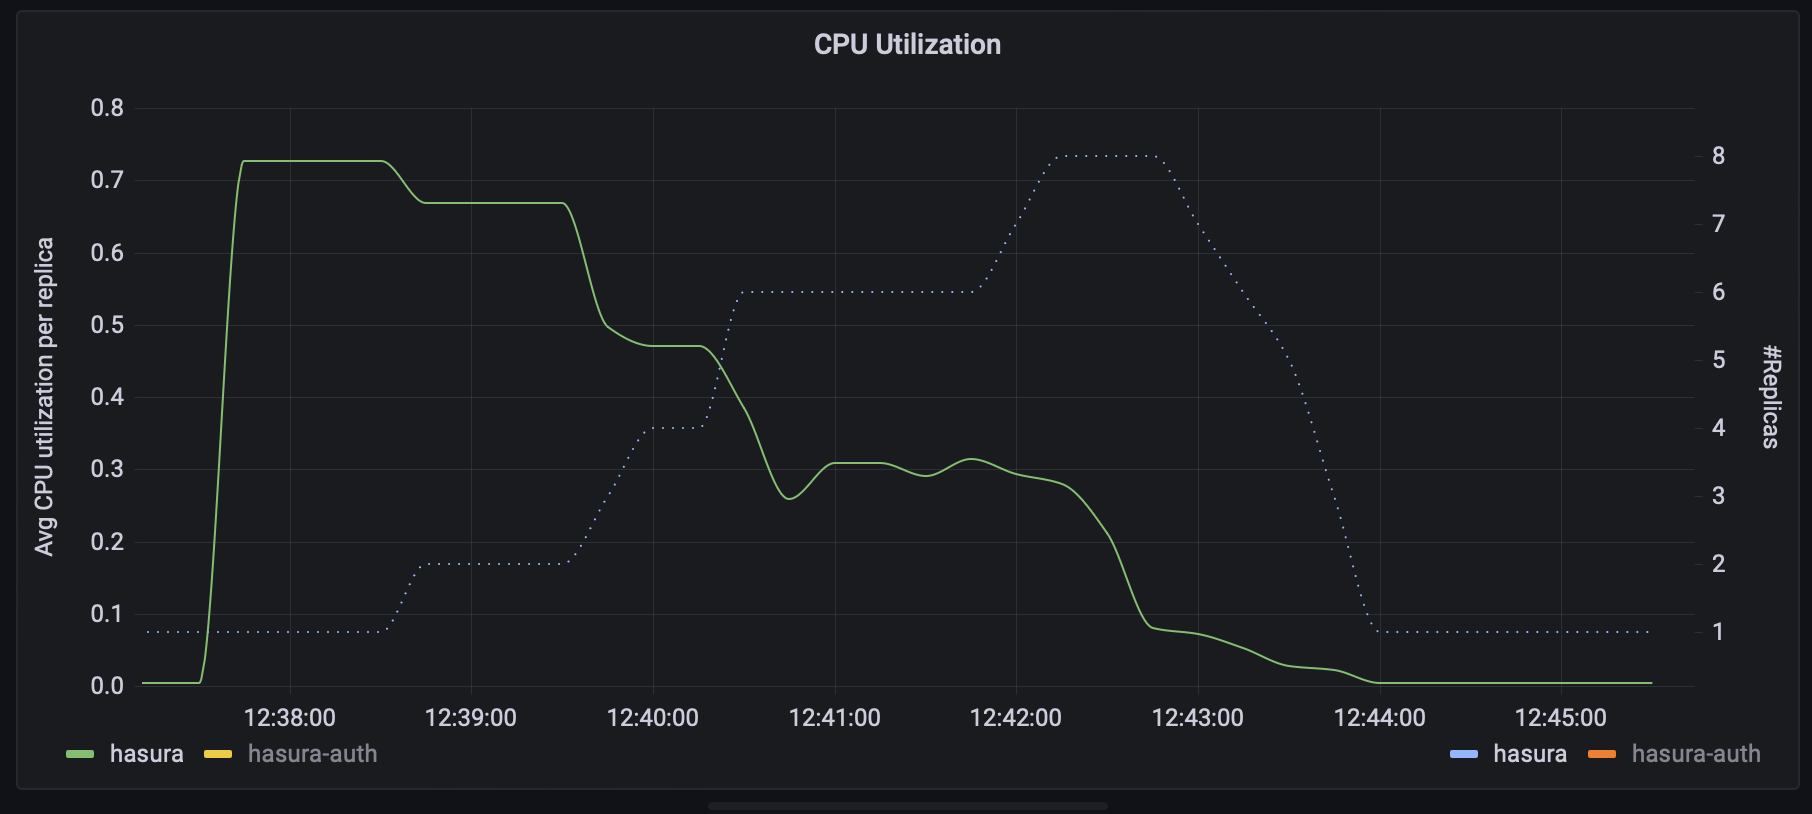 Average CPU Utilization per Replica vs # Replicas (hasura)